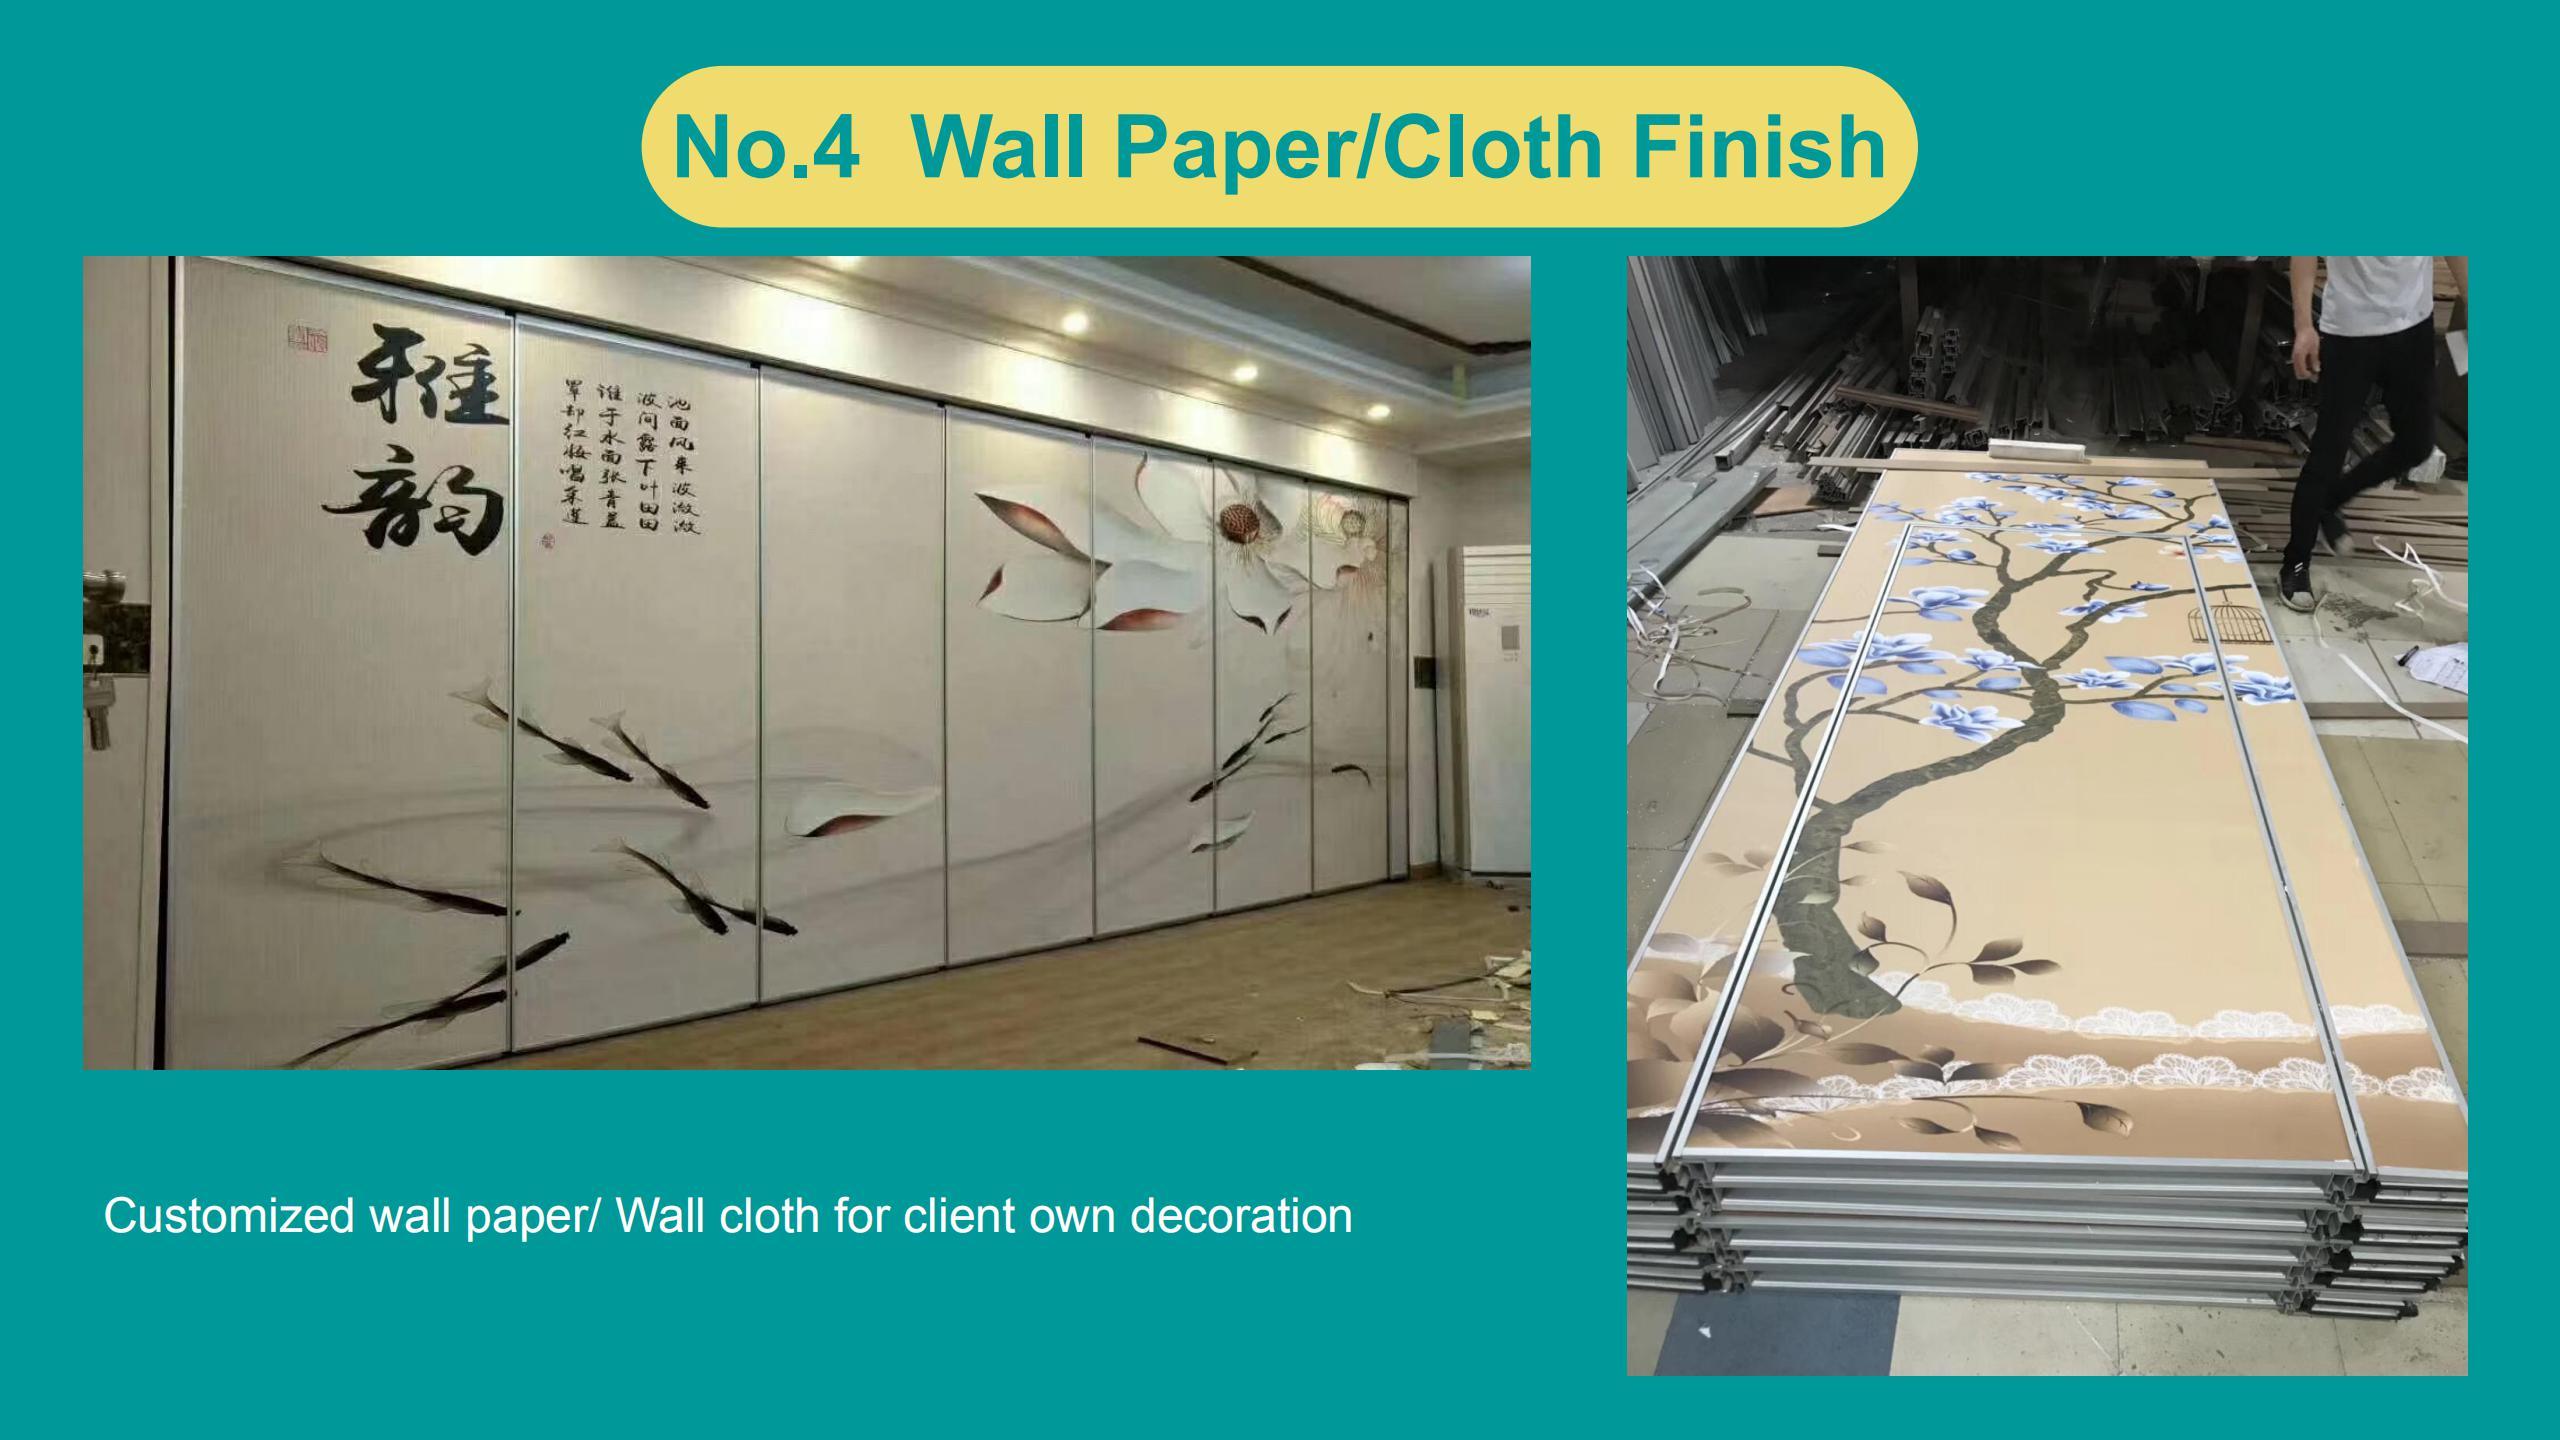 Wall Paper/Cloth Finish